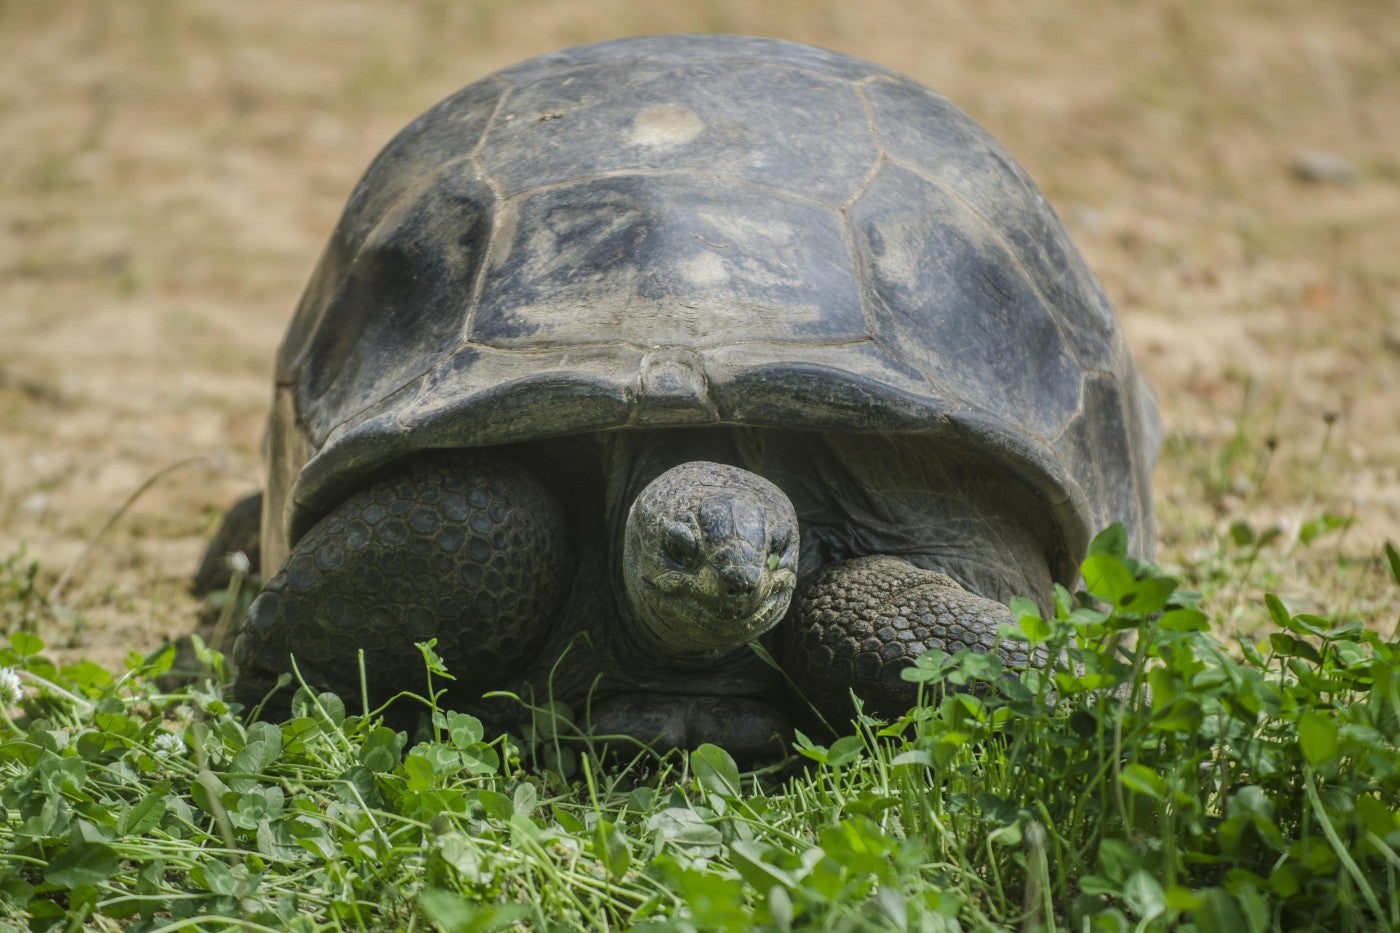 Aldabra tortoise Chyna eats grass in her outdoor habitat. 